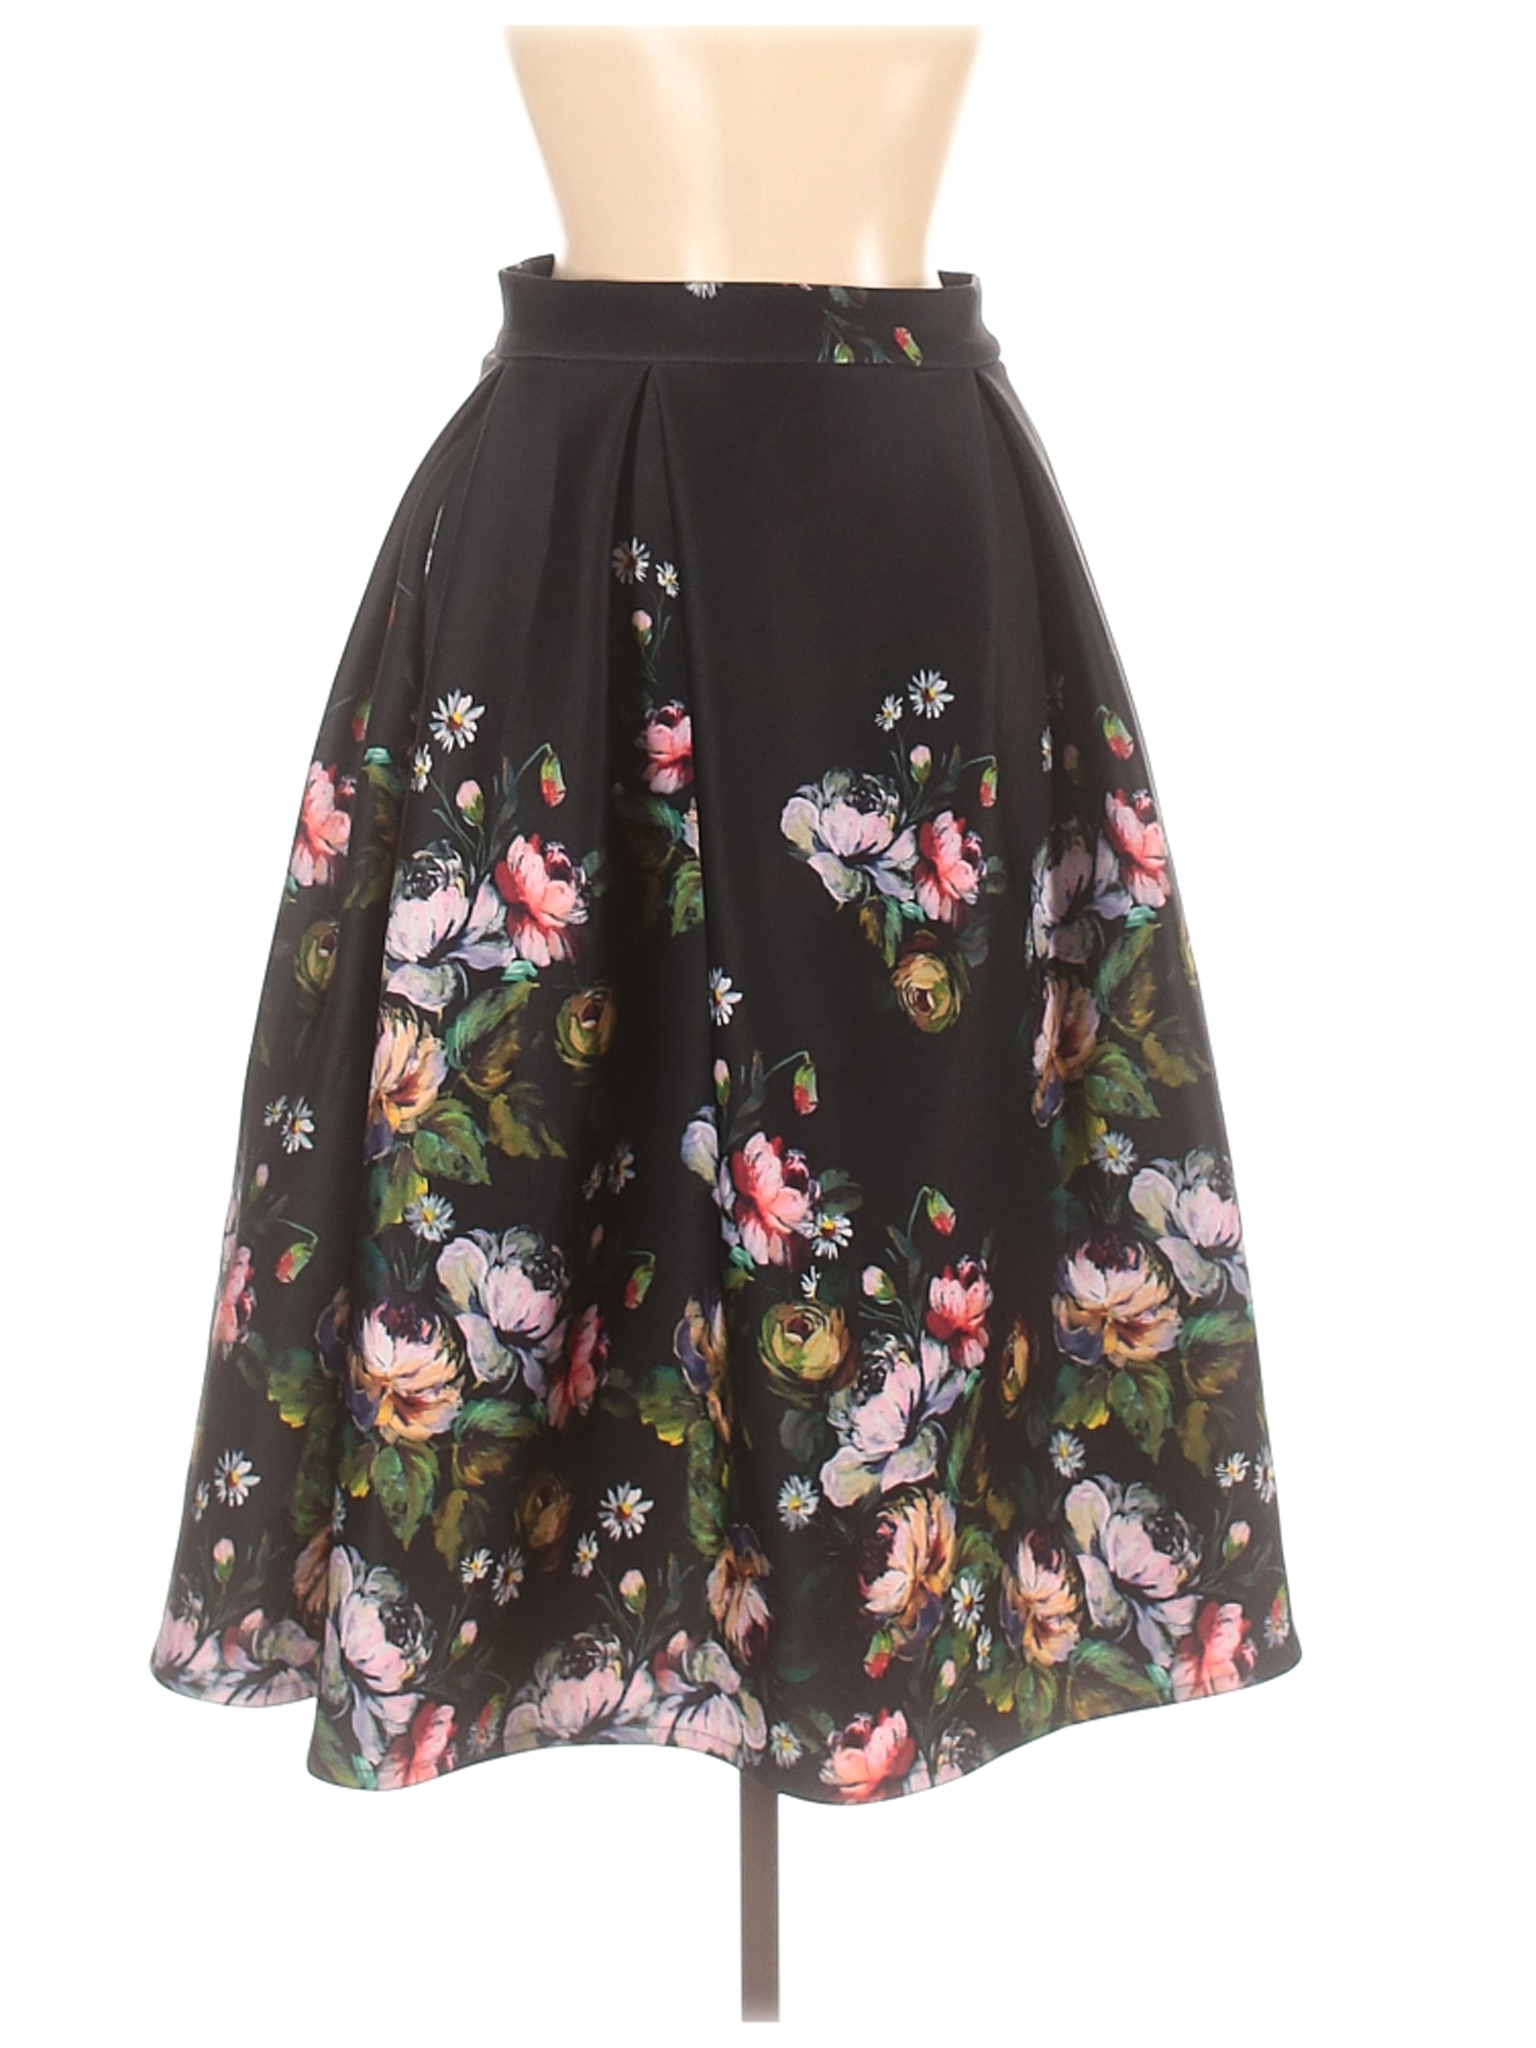 Assorted Brands Women Black Casual Skirt M | eBay